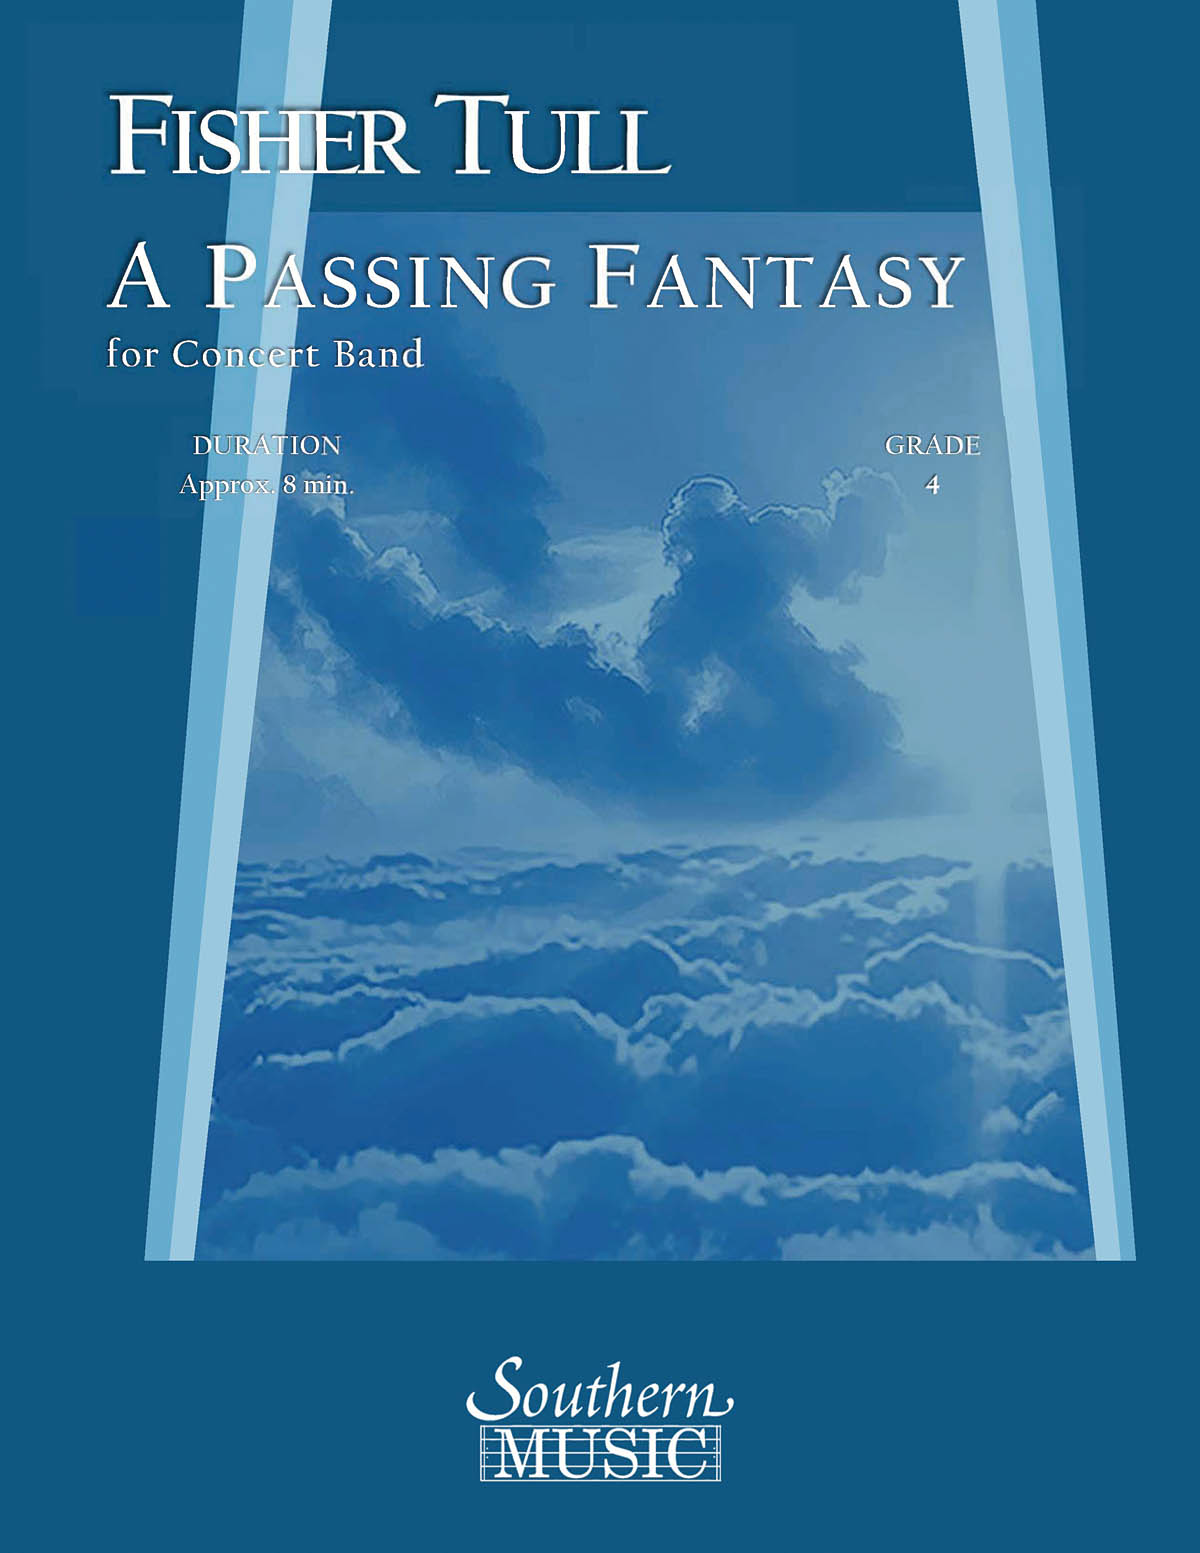 Passing Fantasy, A